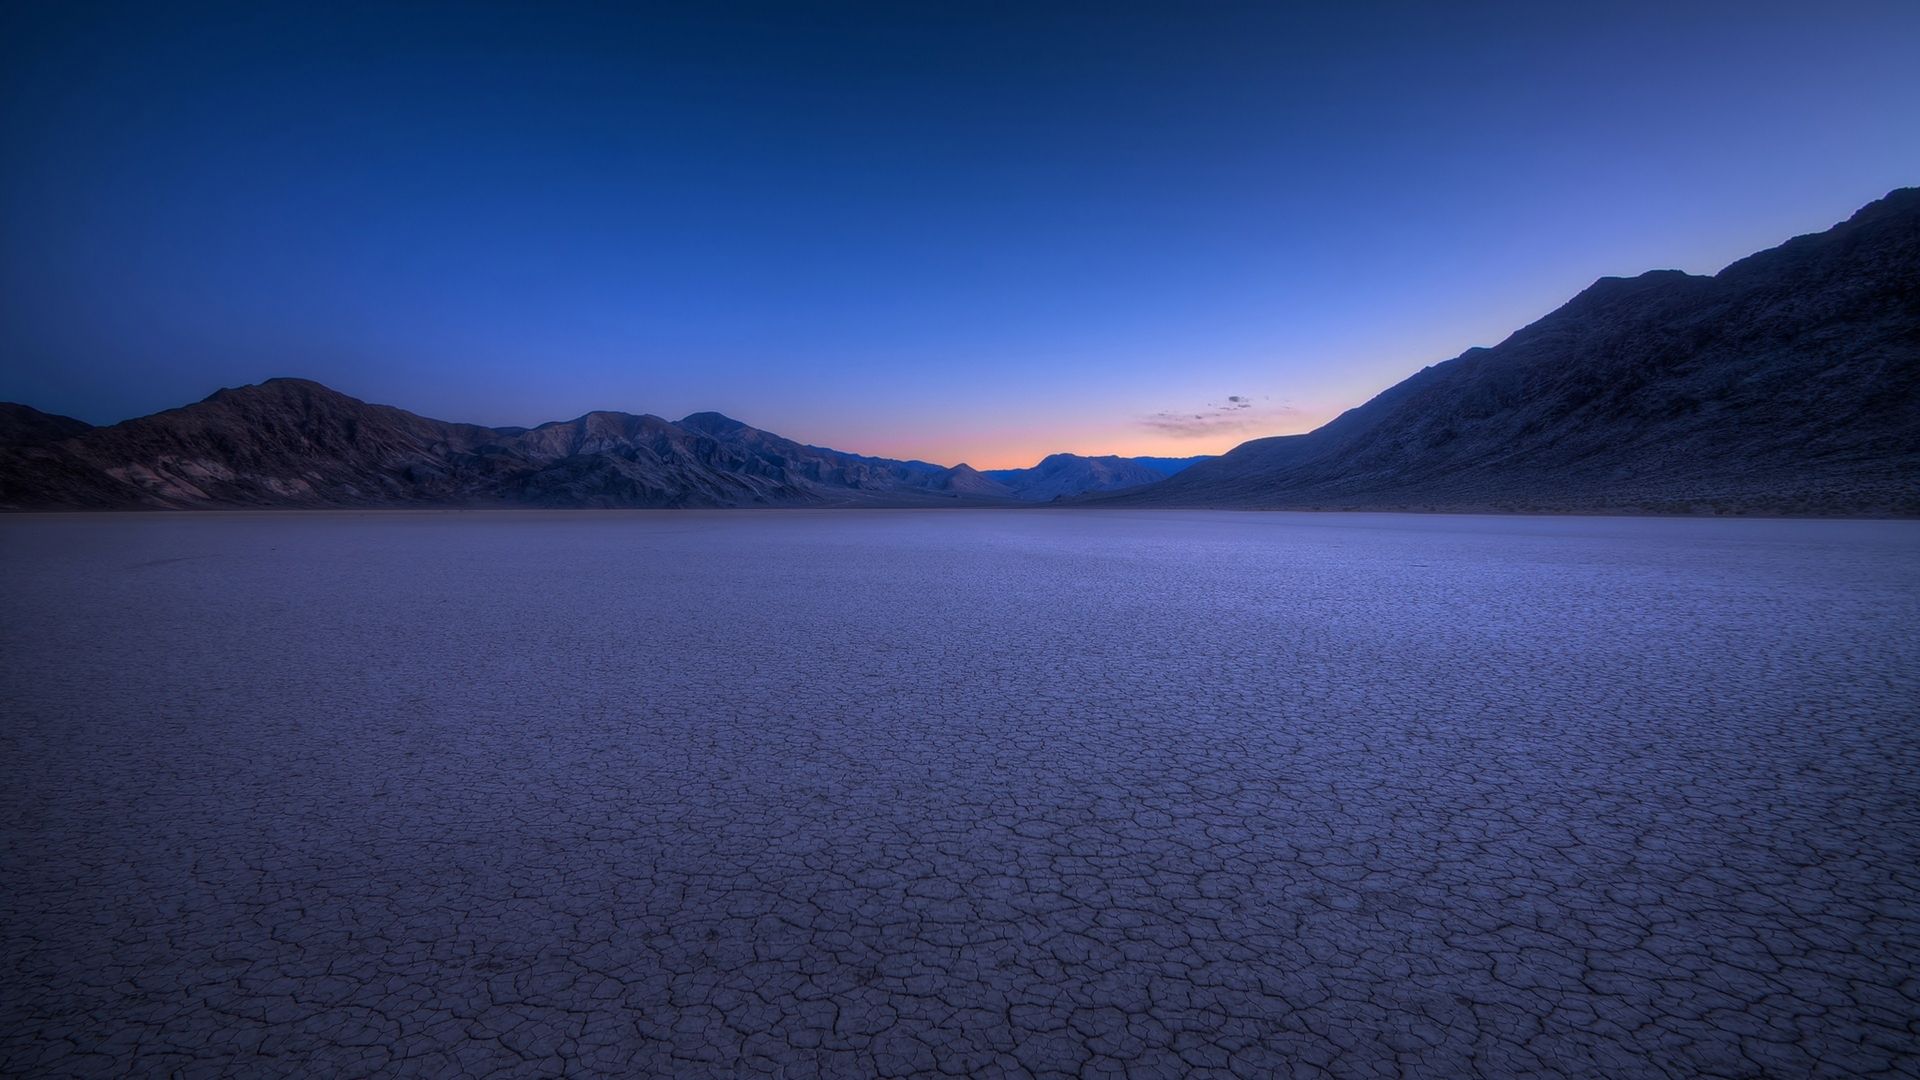 Drought Desert Landscape, HD Nature, 4k Wallpaper, Image